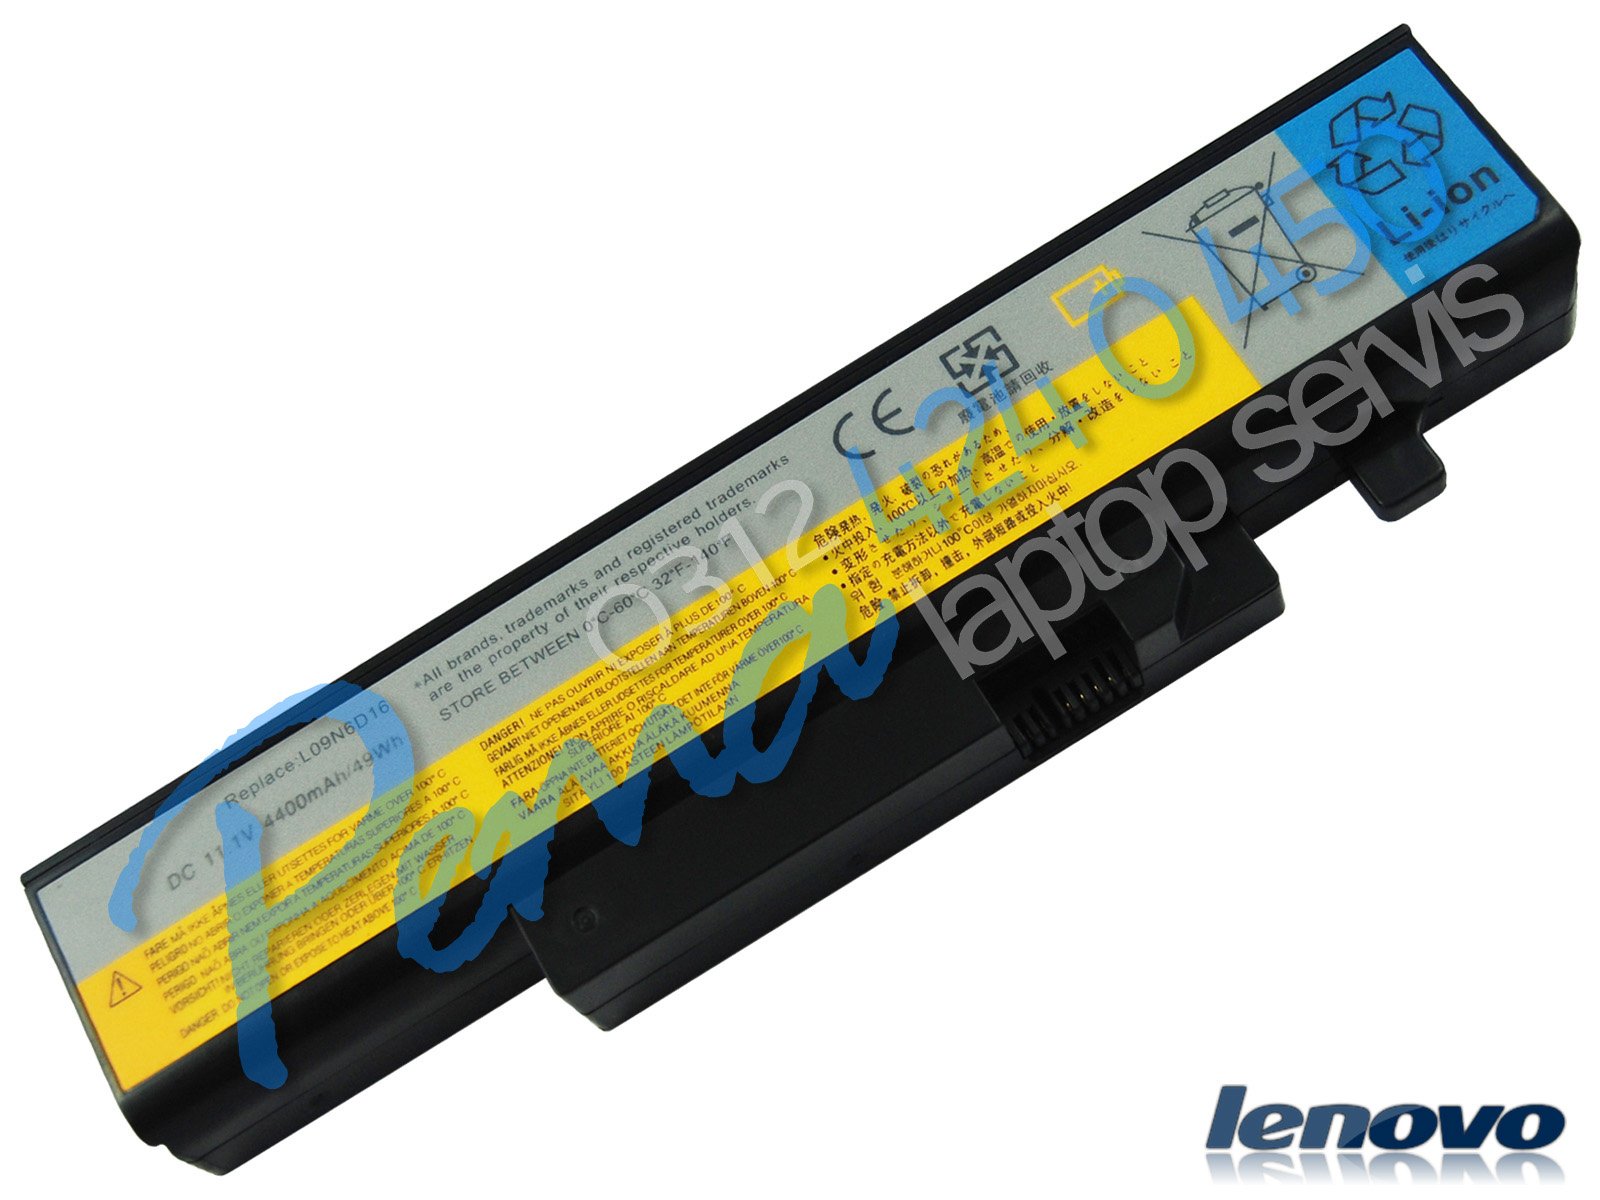 Lenovo Y560 batarya